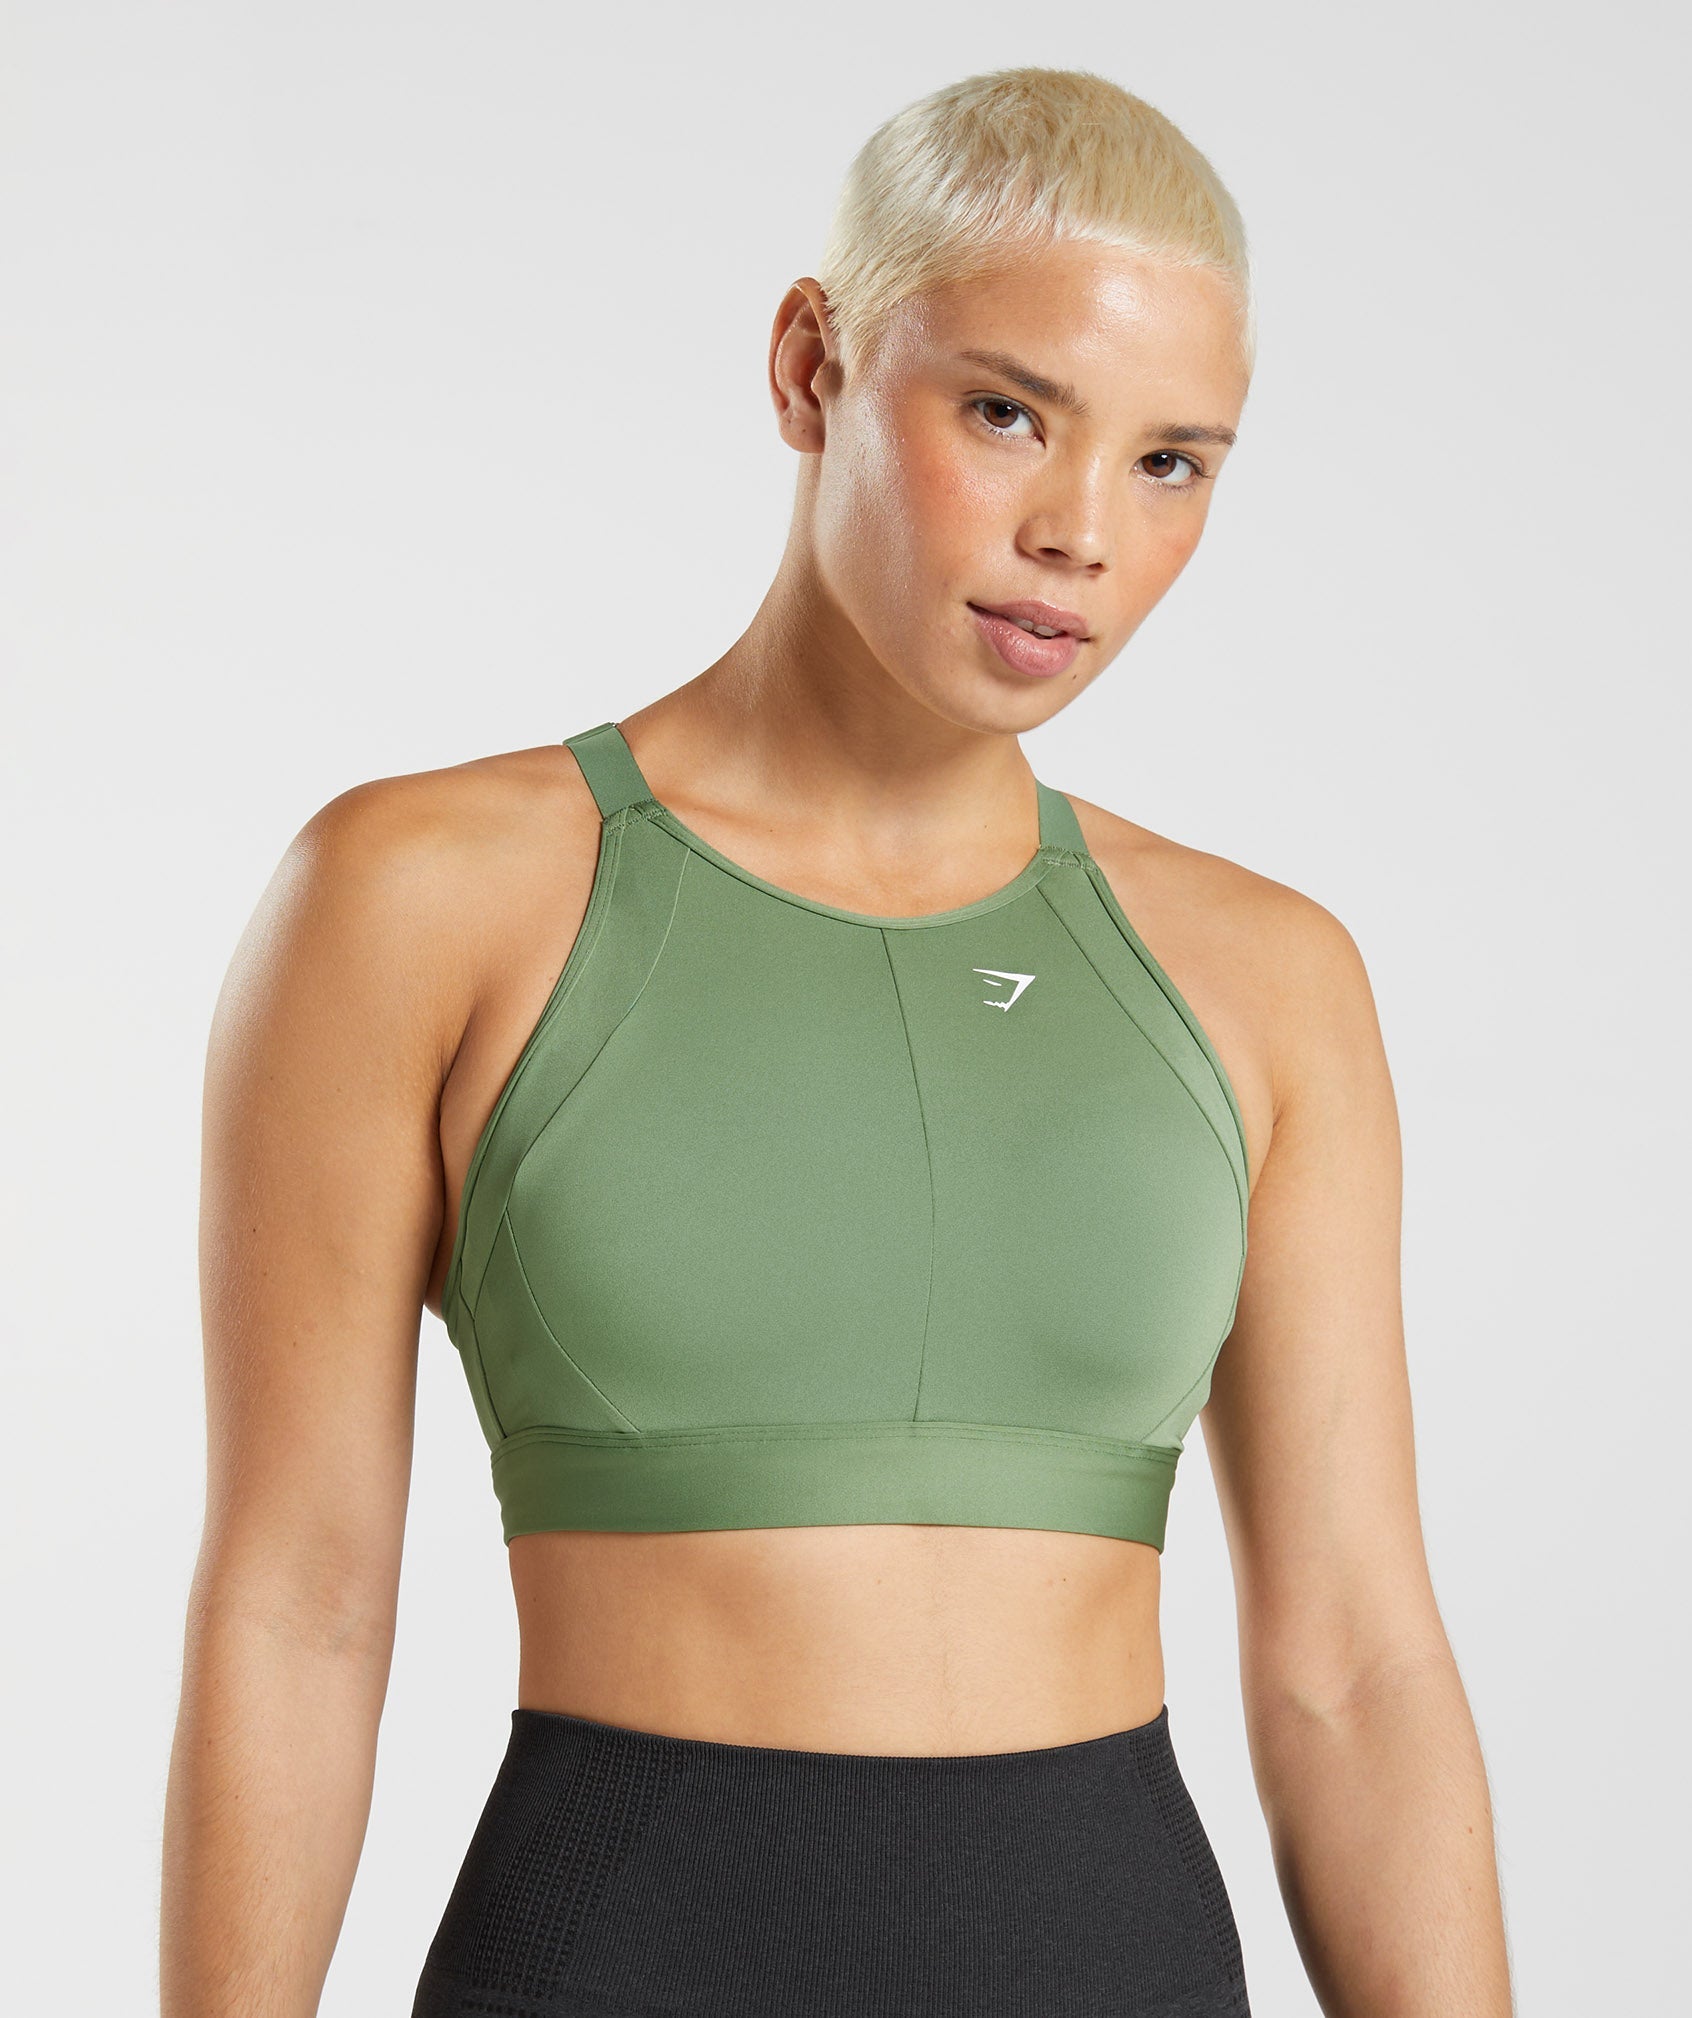 Gymshark sports bras bundle - Athletic apparel